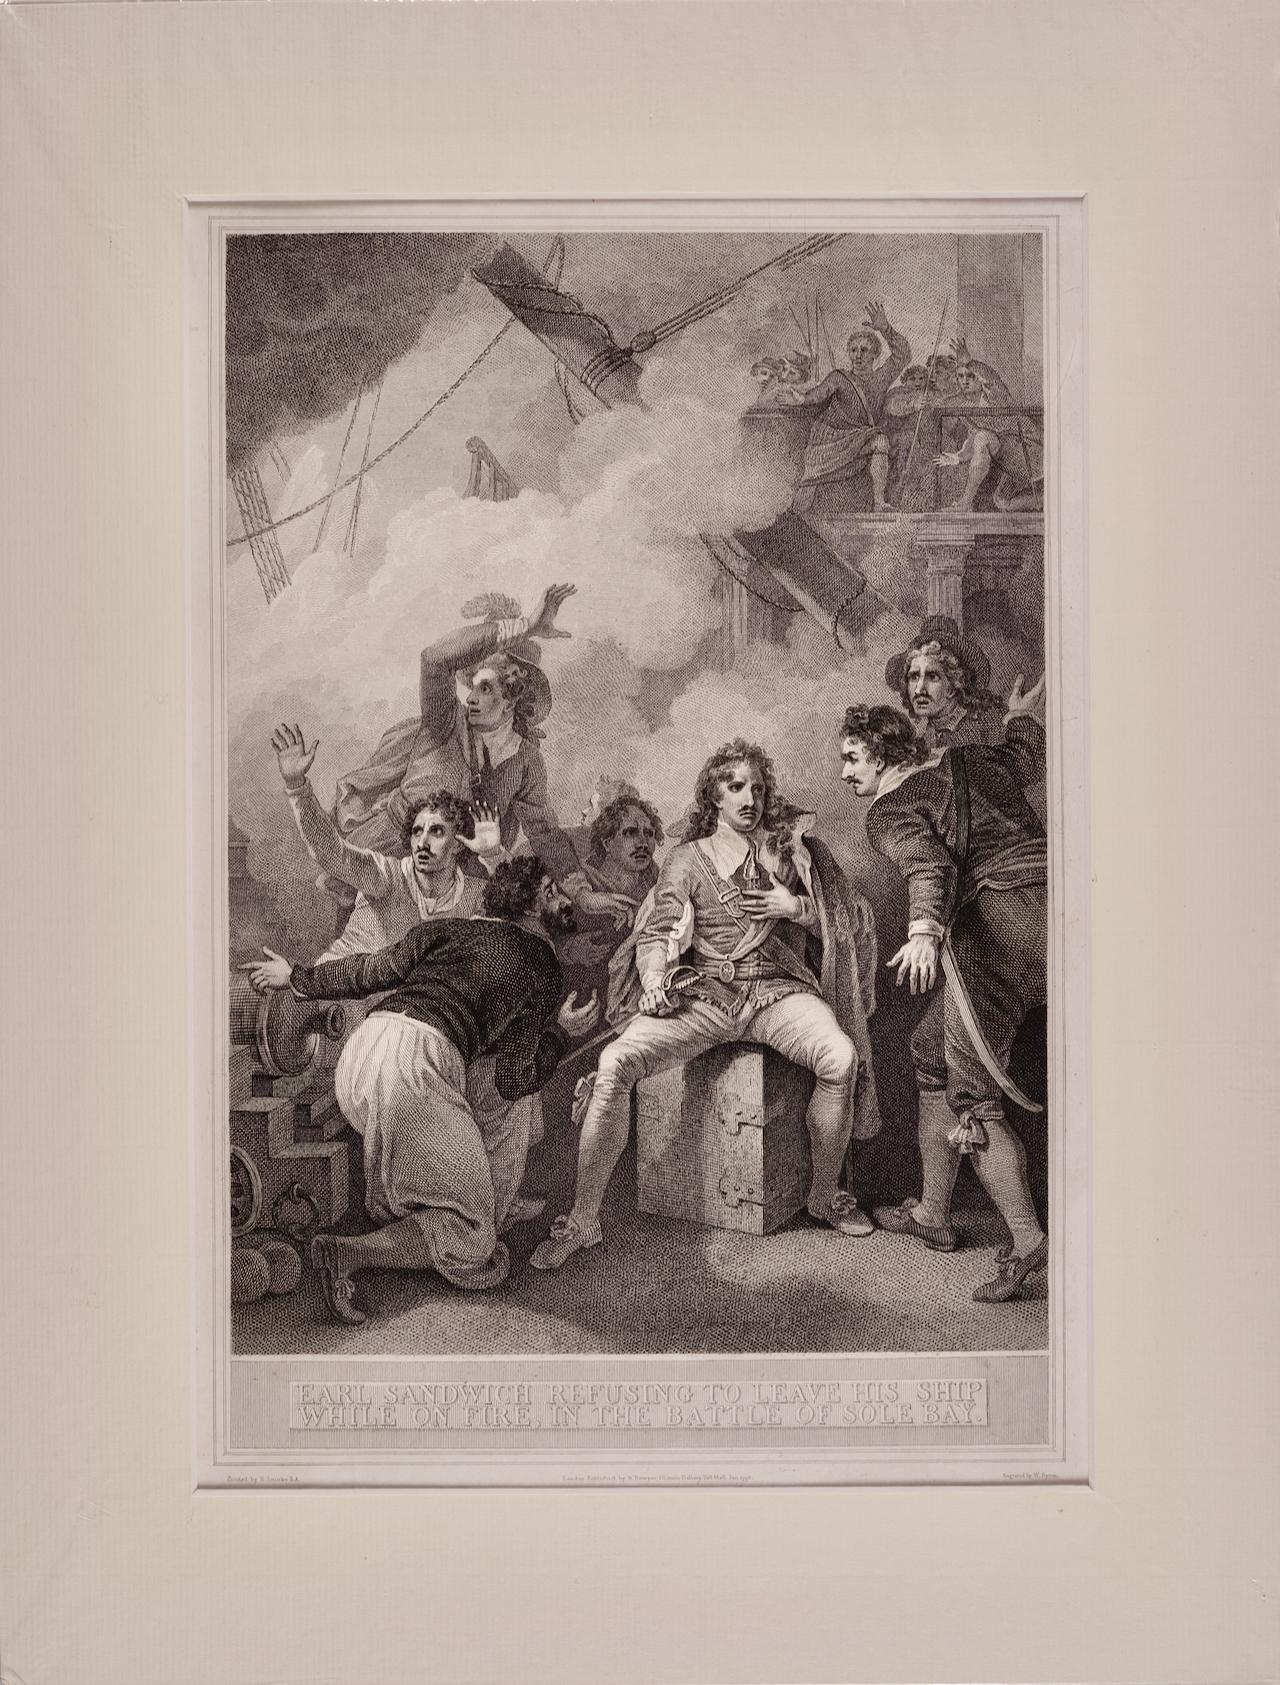 « Earl Sandwich Refusing to Leave His Ship » : eau-forte/gravure du 18e siècle - Print de Robert Smirke